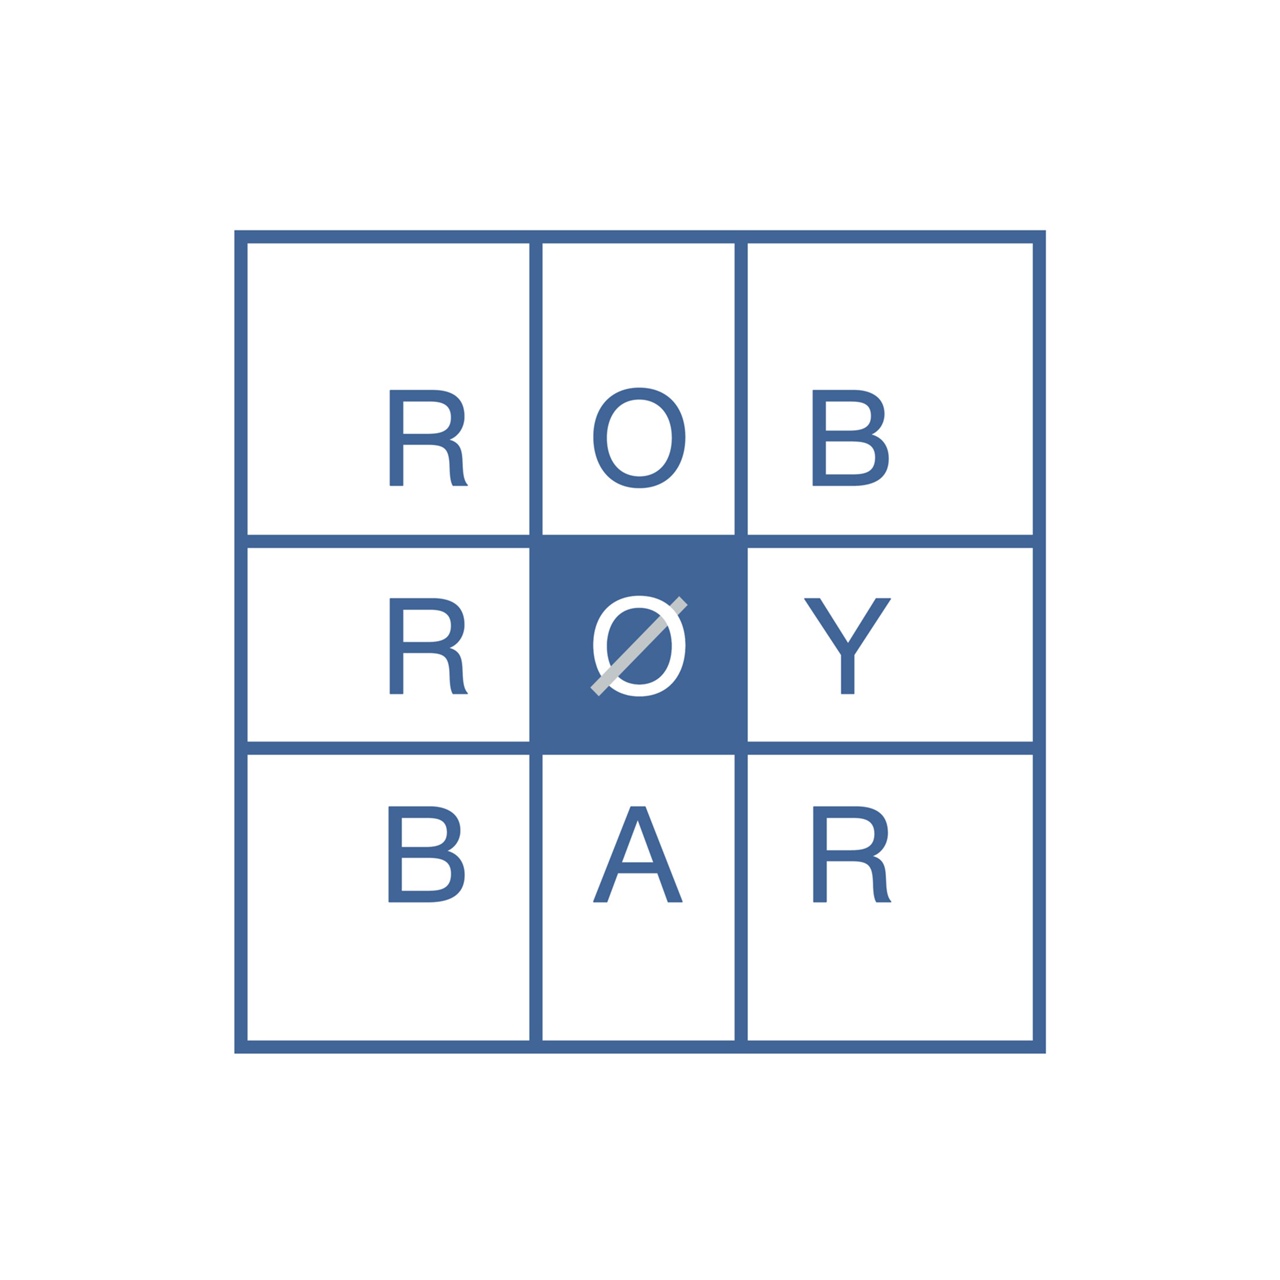 Rob Roy Bar